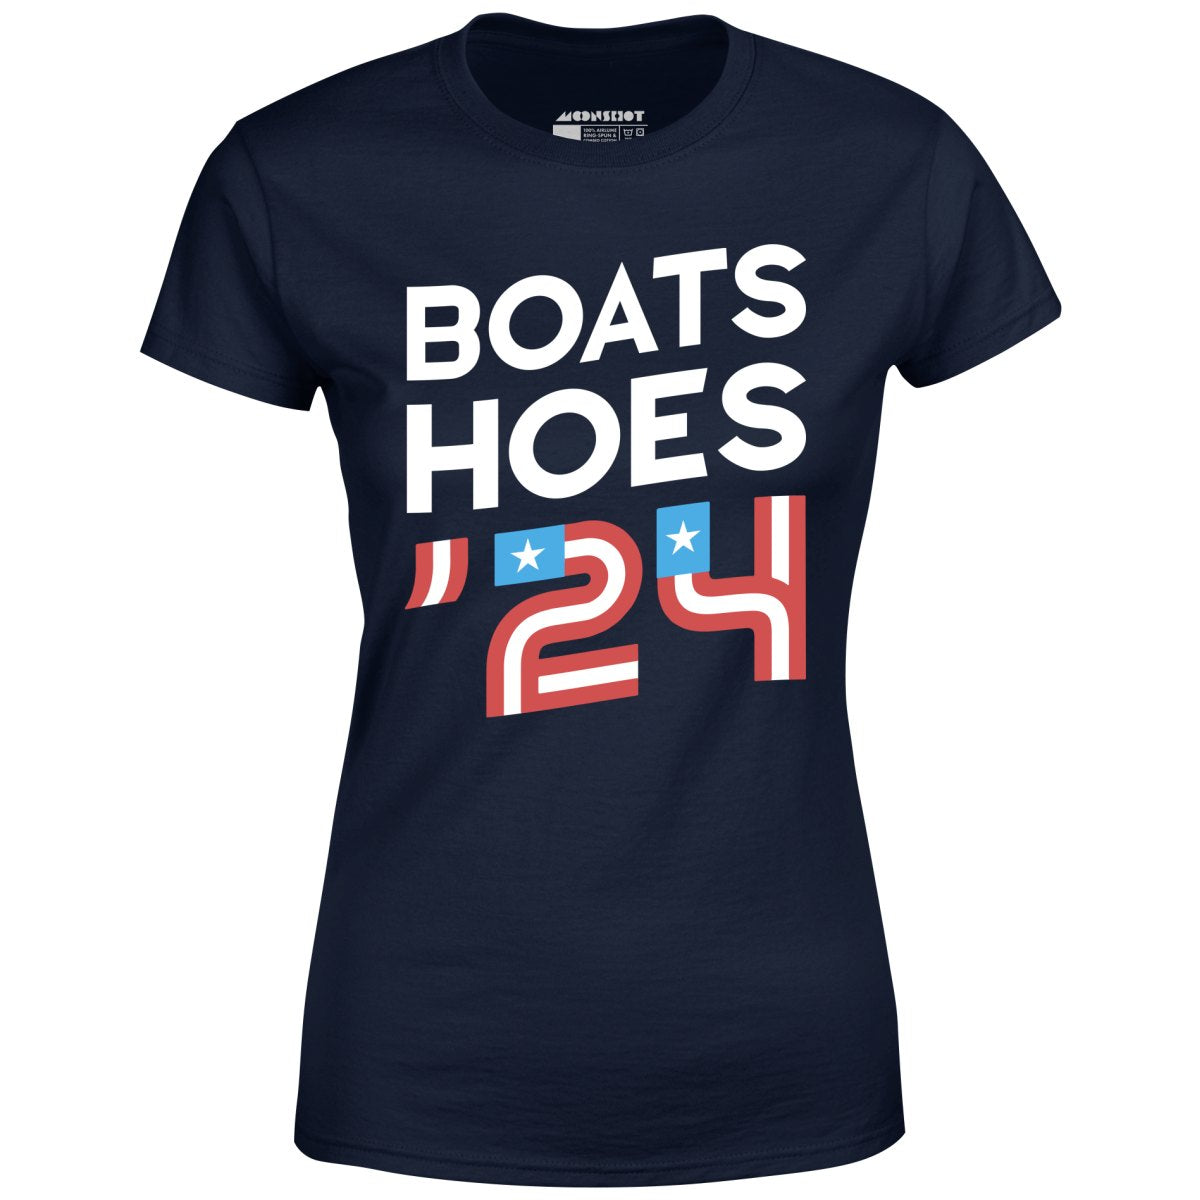 Boats & Hoes '24 - Women's T-Shirt